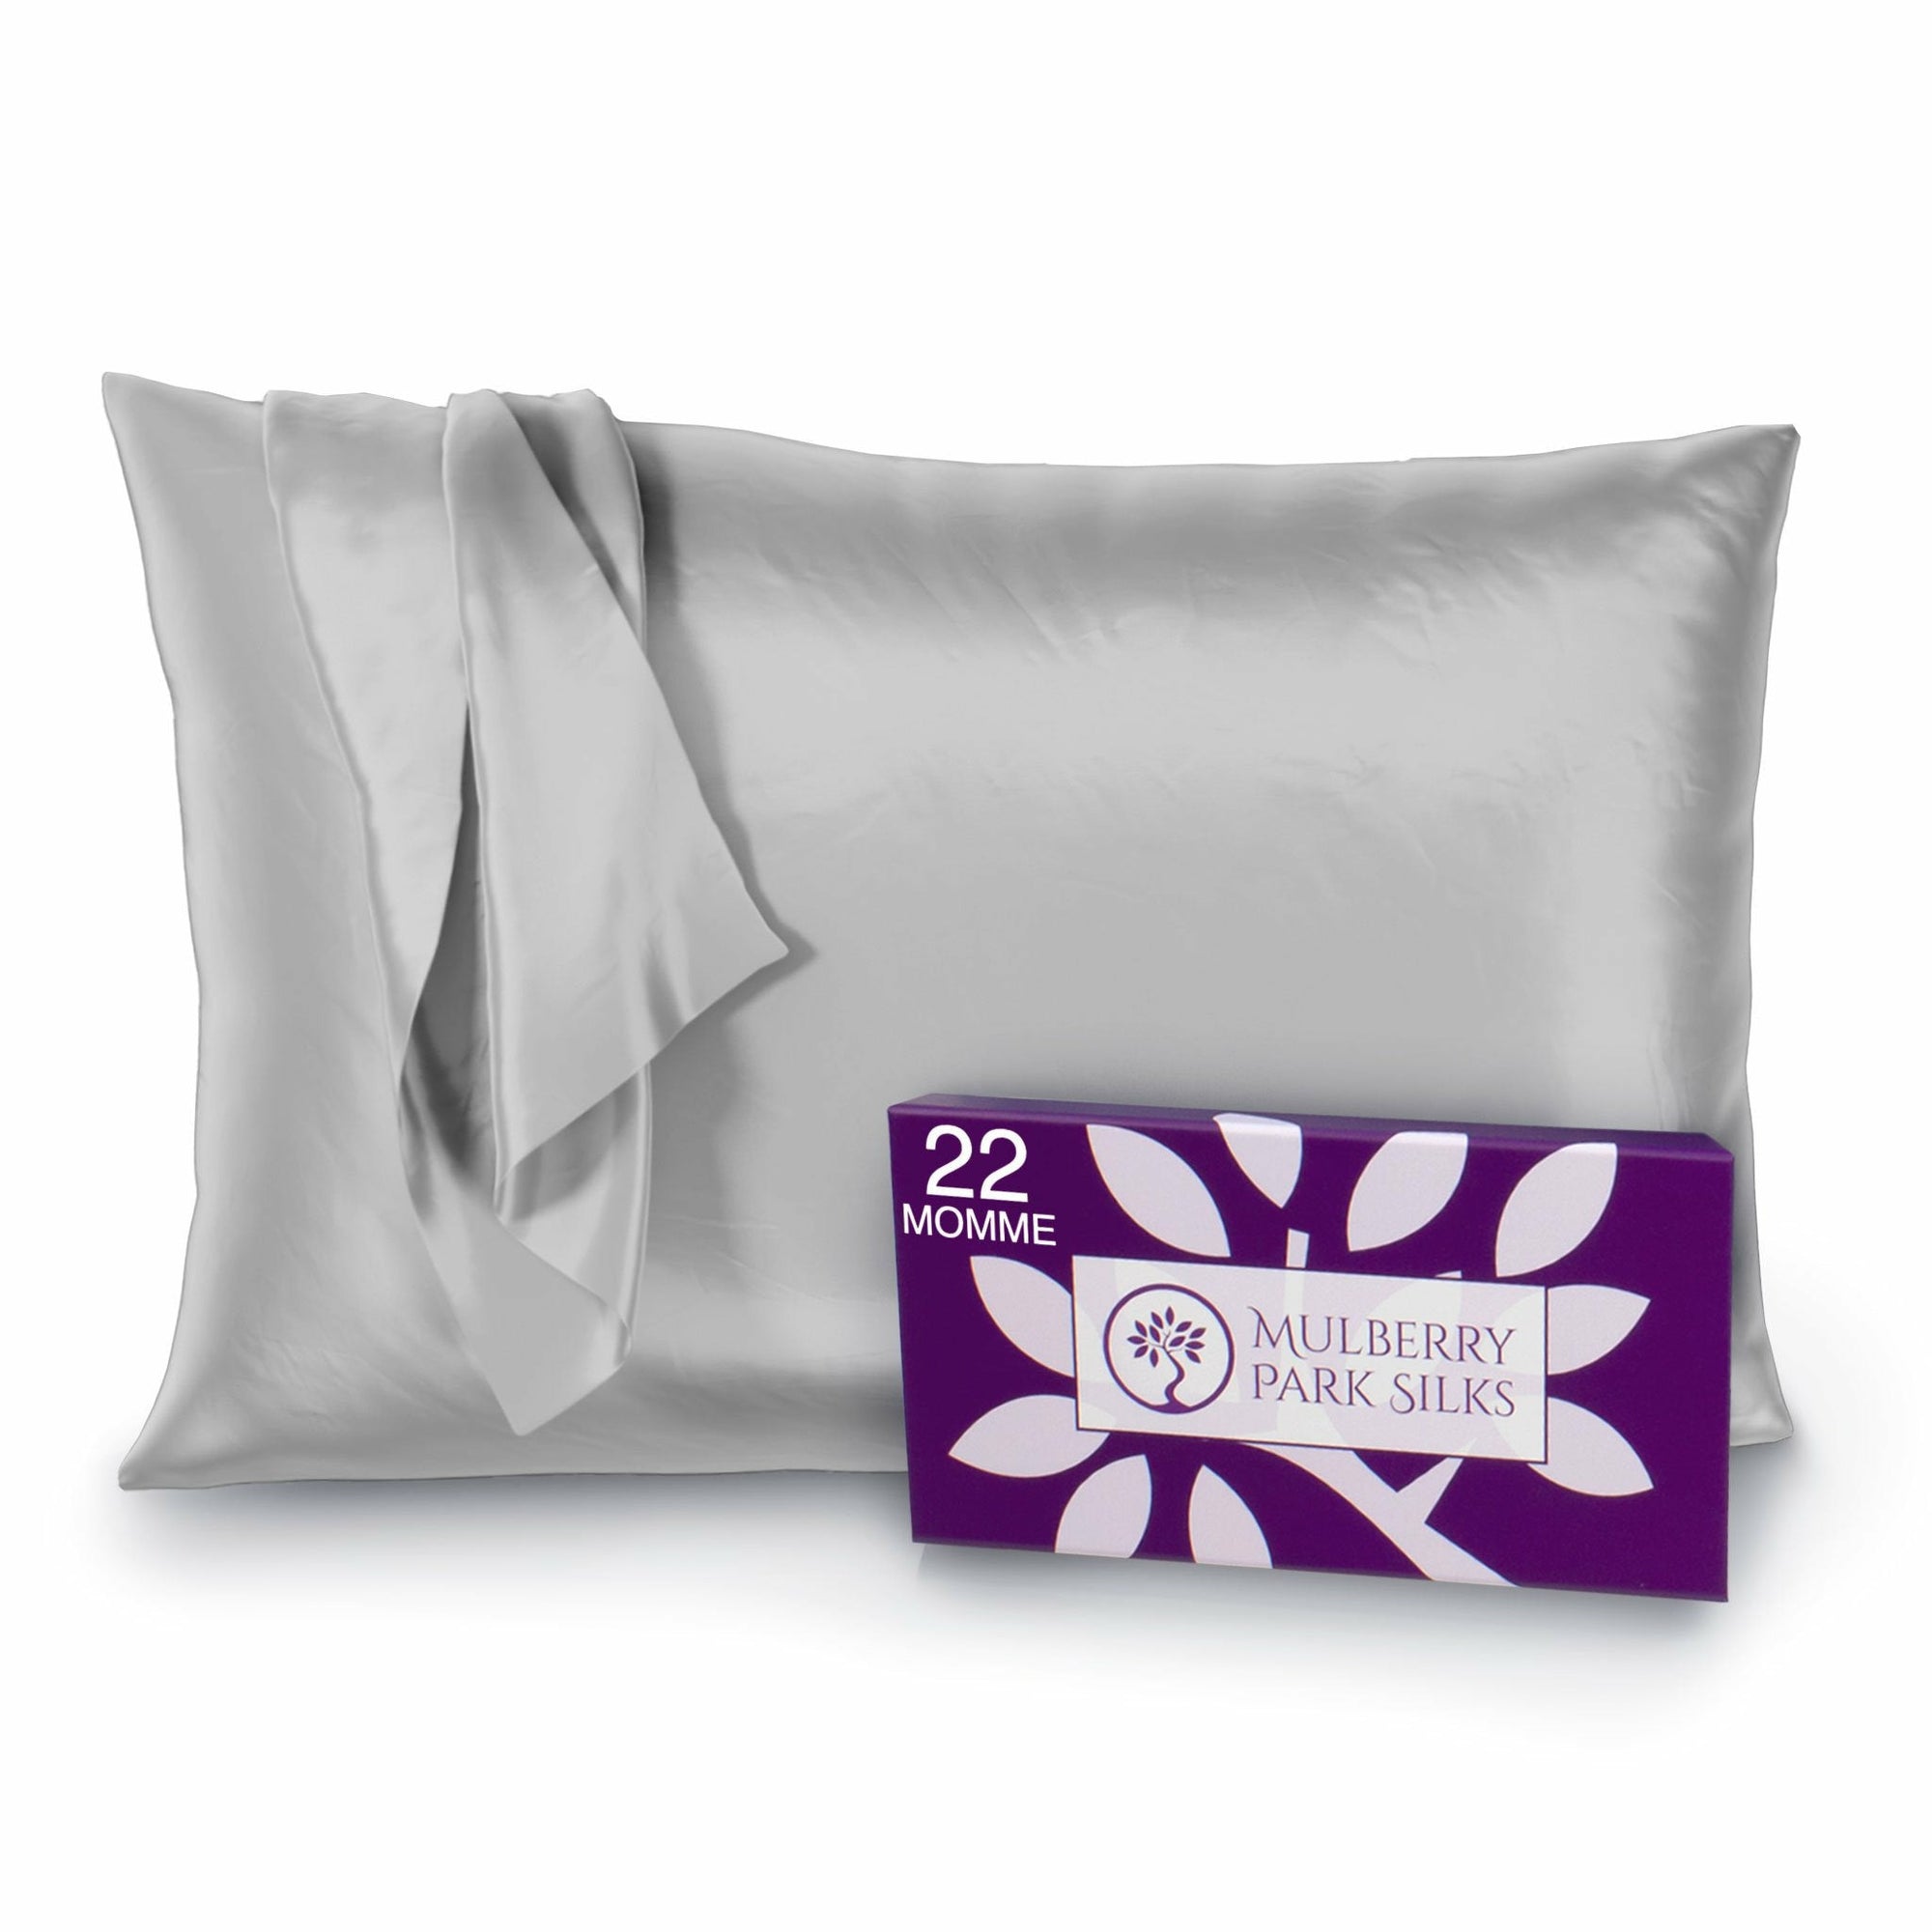 Mulberry Park Silks Deluxe 22 Momme Pure Silk Pillowcase Main Silver Fine Linens